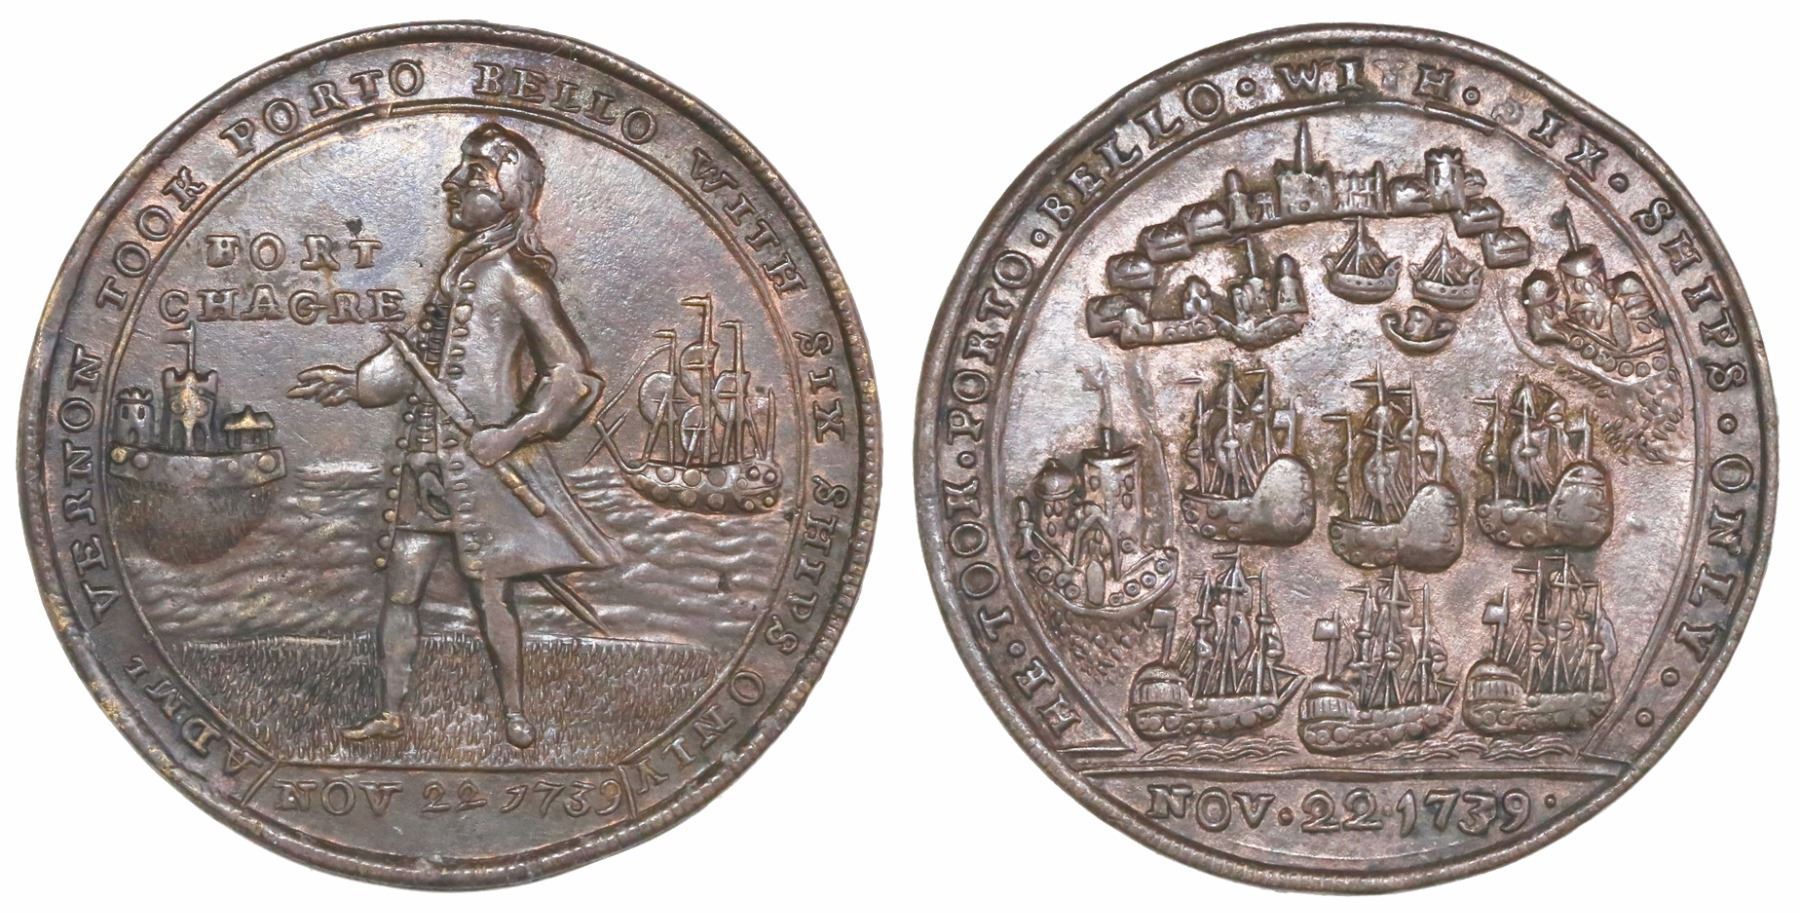 Admiral Vernon medals 1739, 1741. Images courtesy Daniel Frank Sedwick, LLC